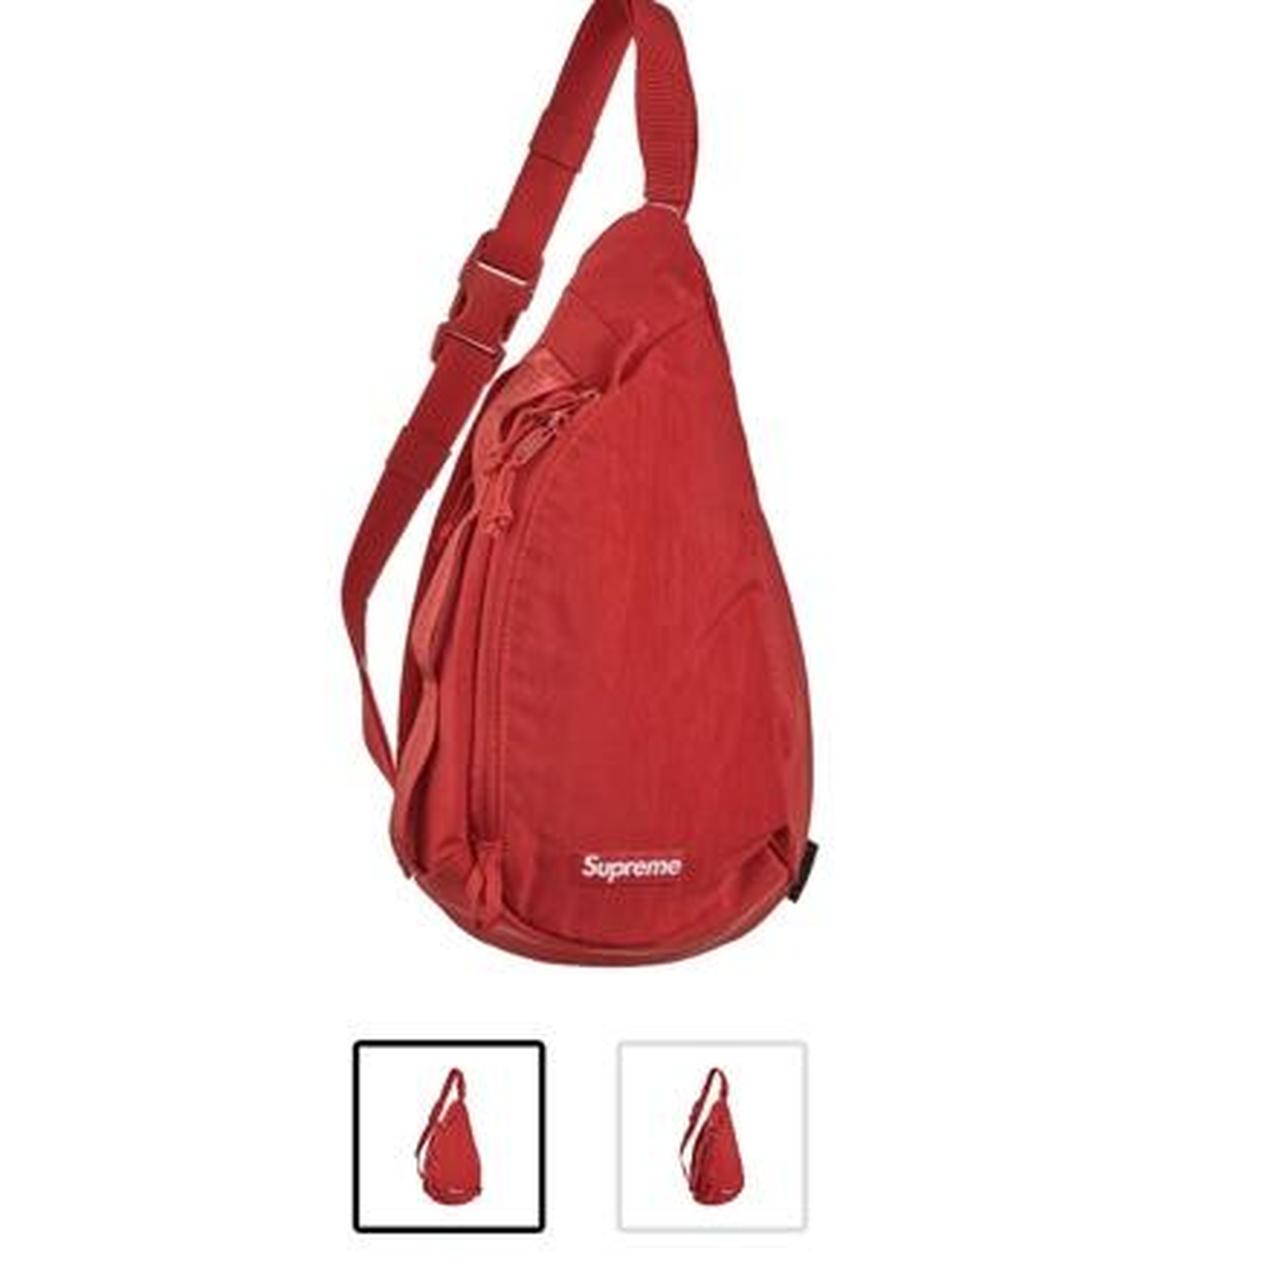 BRAND NEW Supreme Sling Bag In original packaging... - Depop